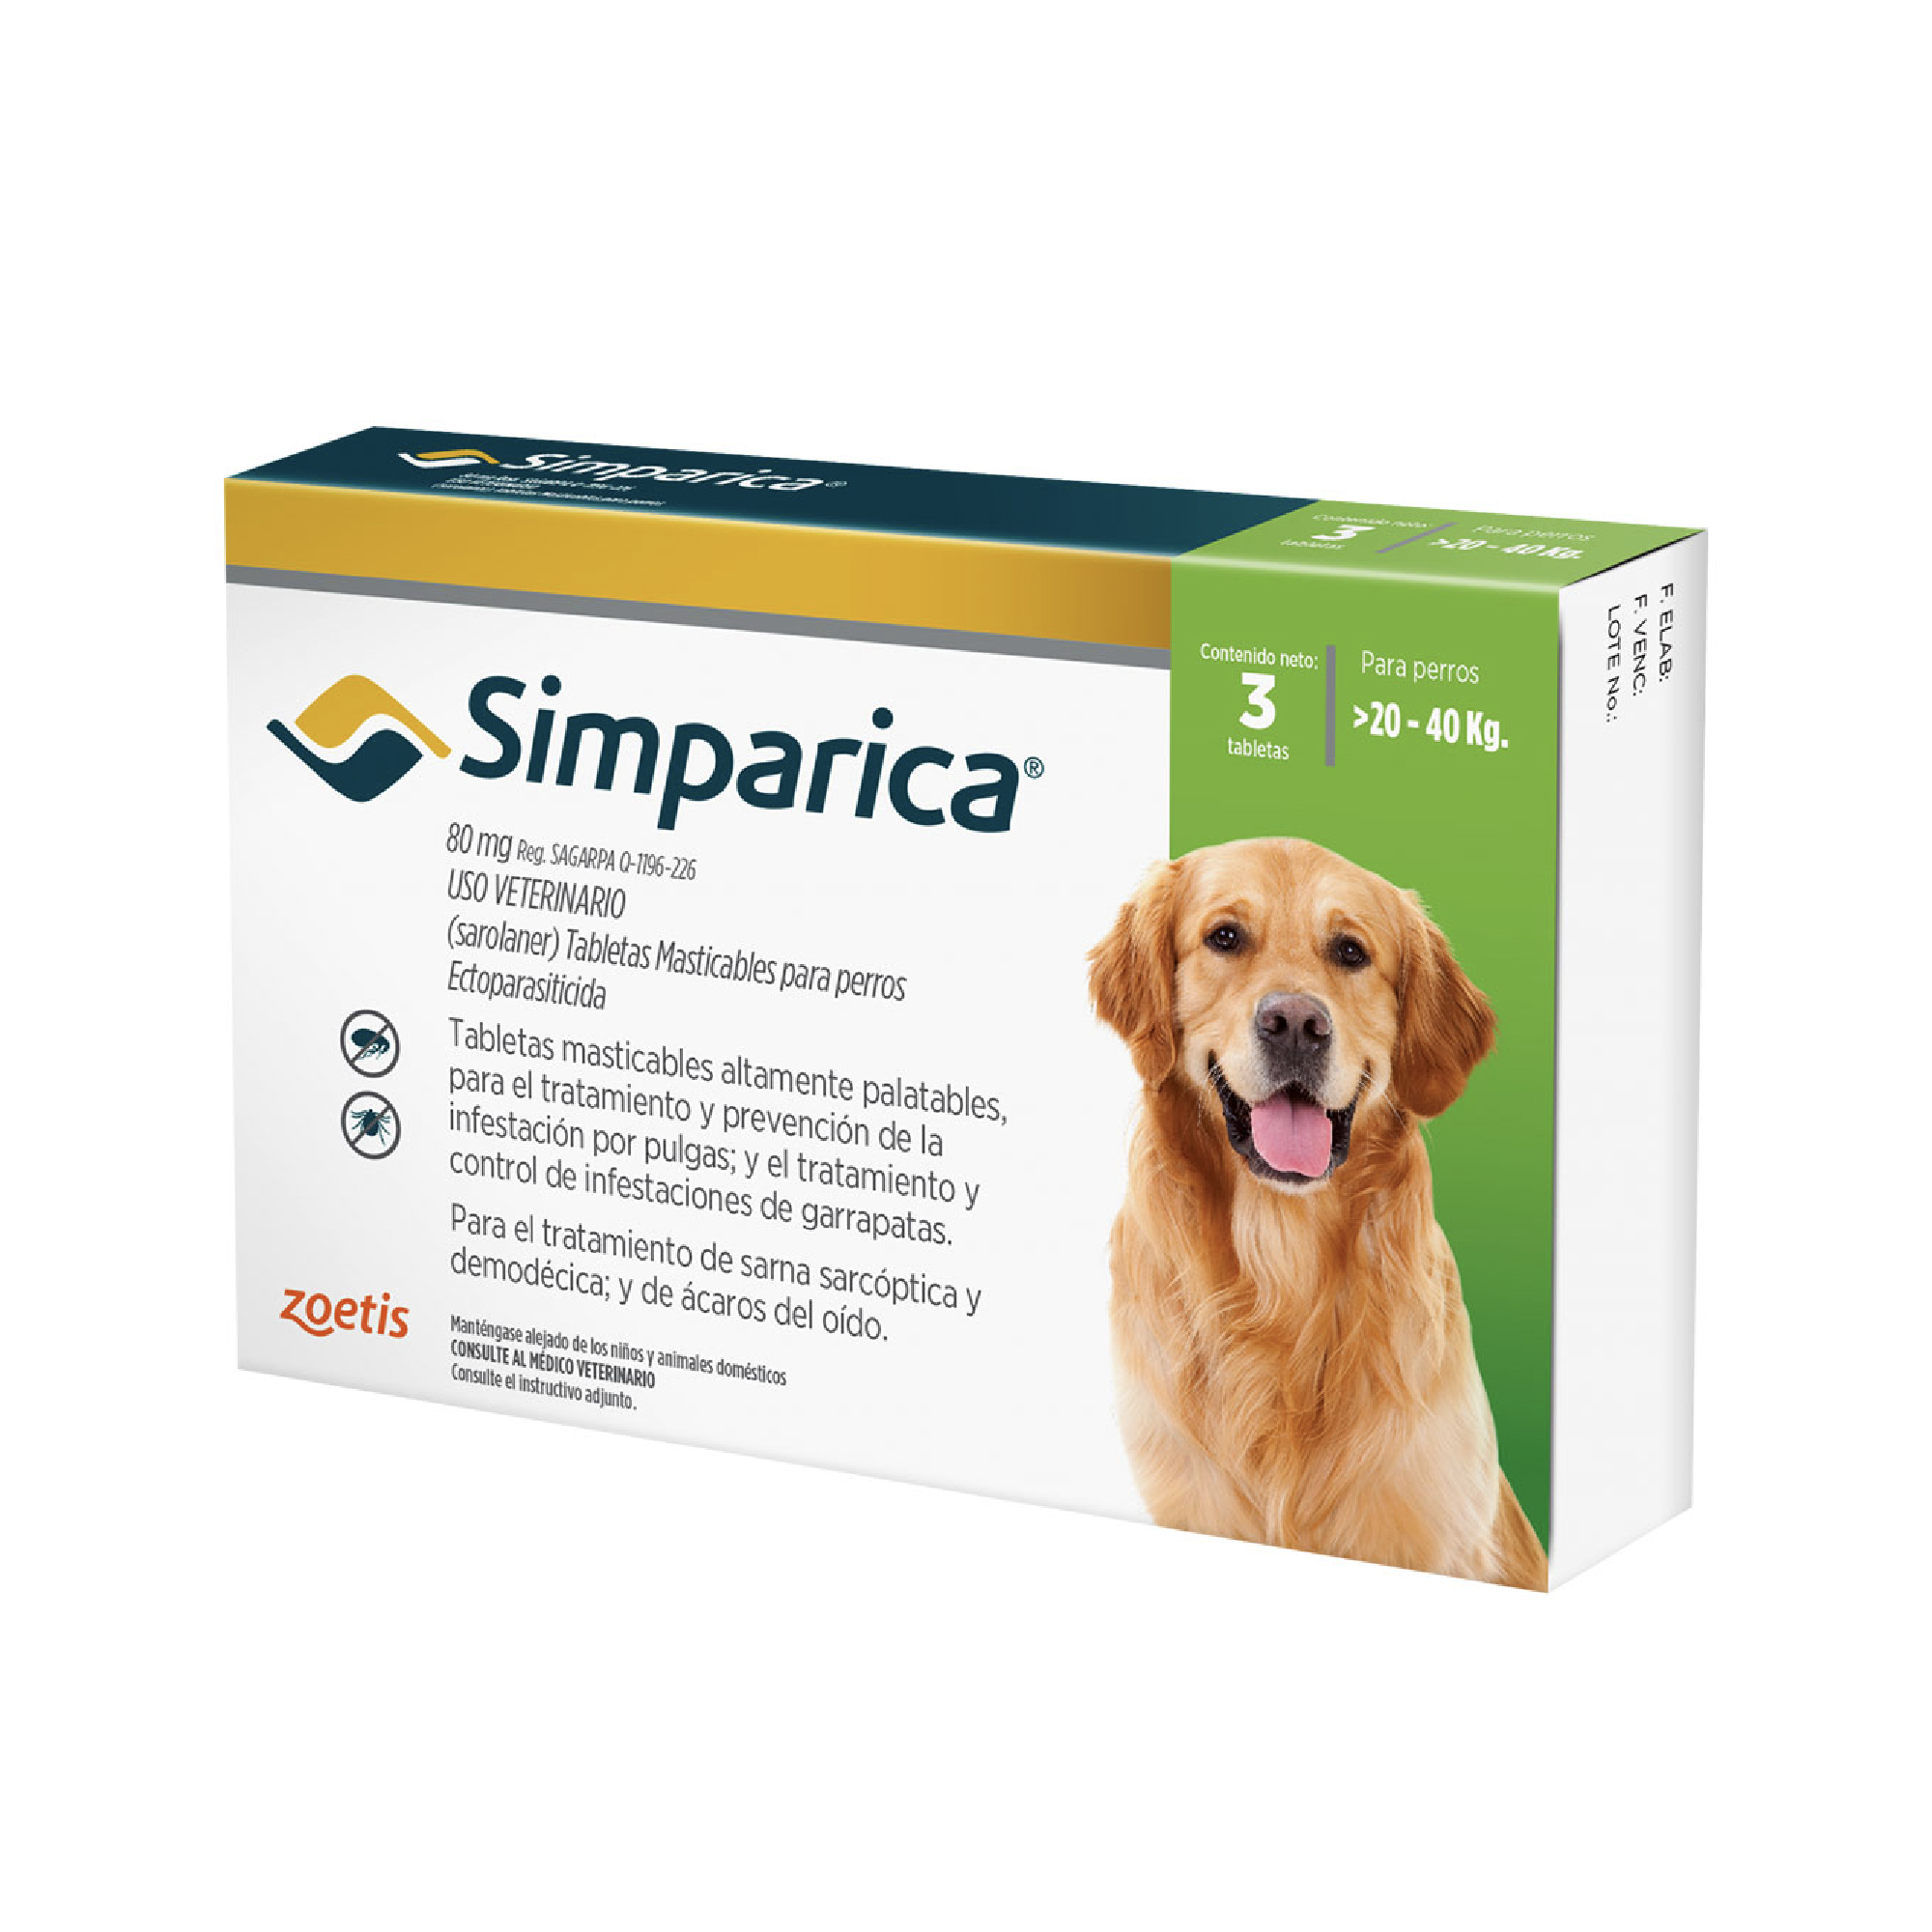 Купить симпарику 2 5 5. Симпарика таблетки от блох и клещей для собак 20,1-40кг, 80мг. Симпарика 20 мг. Симпарика 80мг. Симпарика 40 мг.